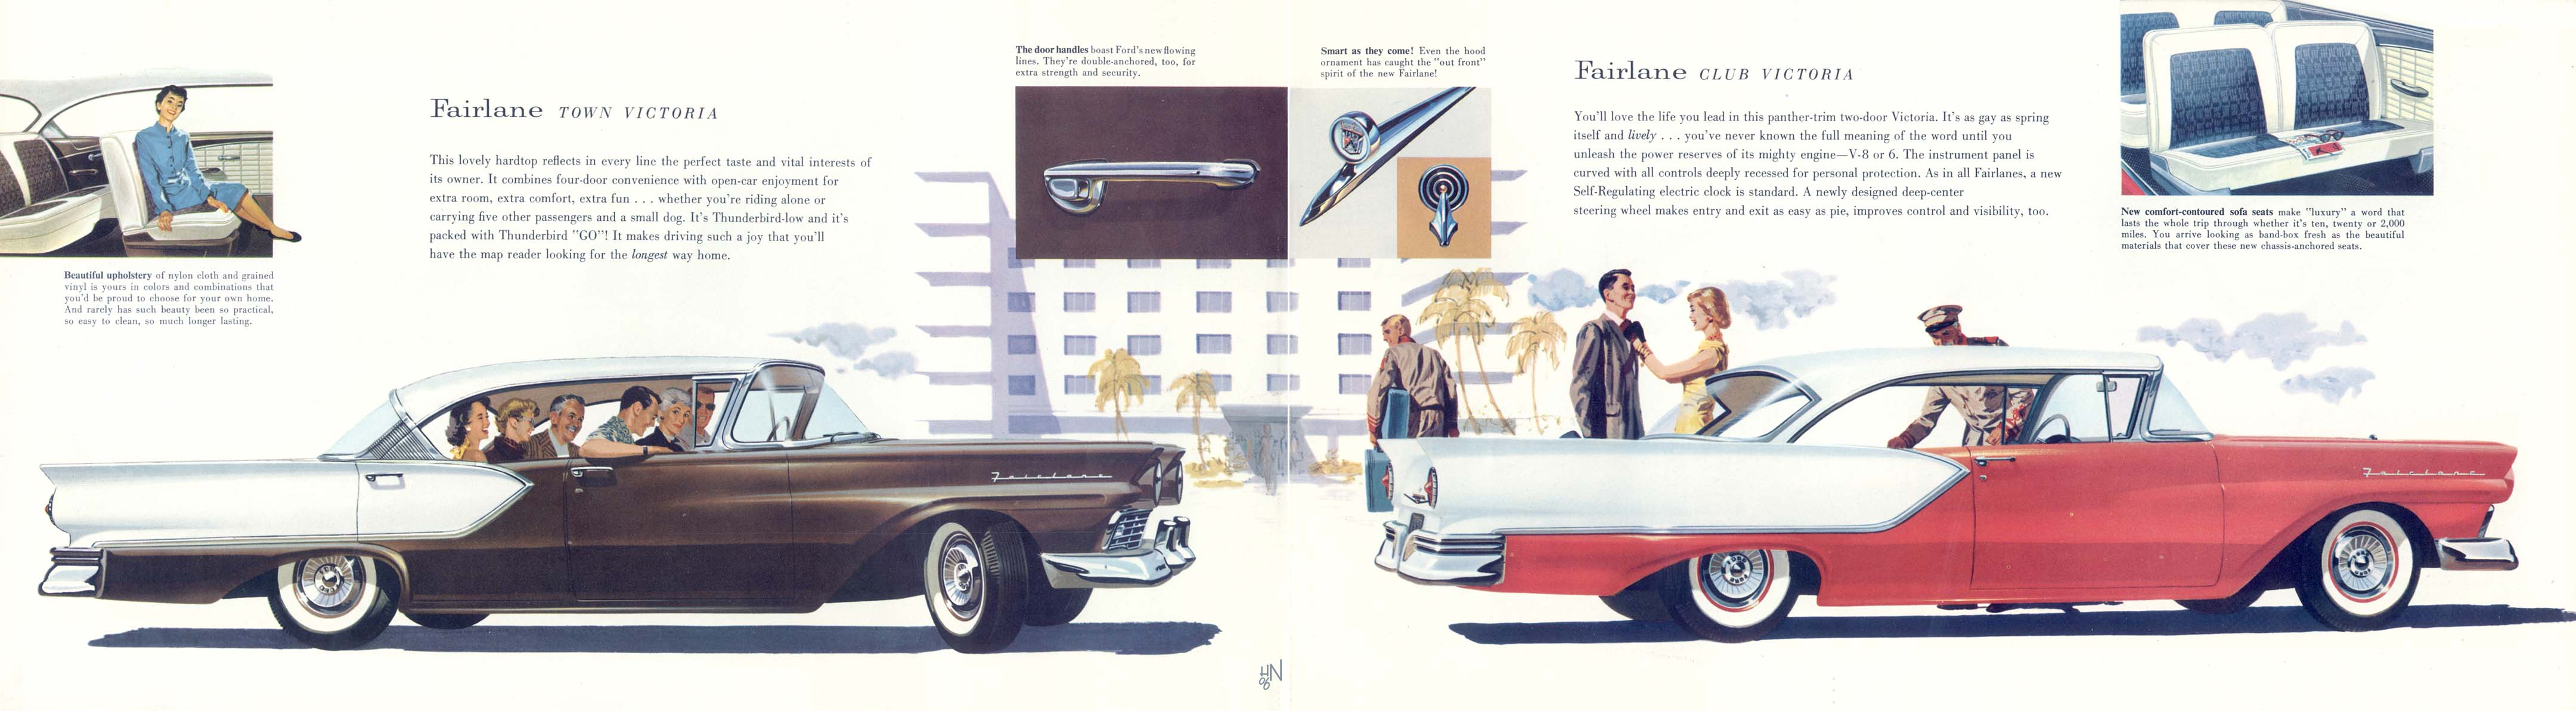 1957 Ford Fairlane-12-13